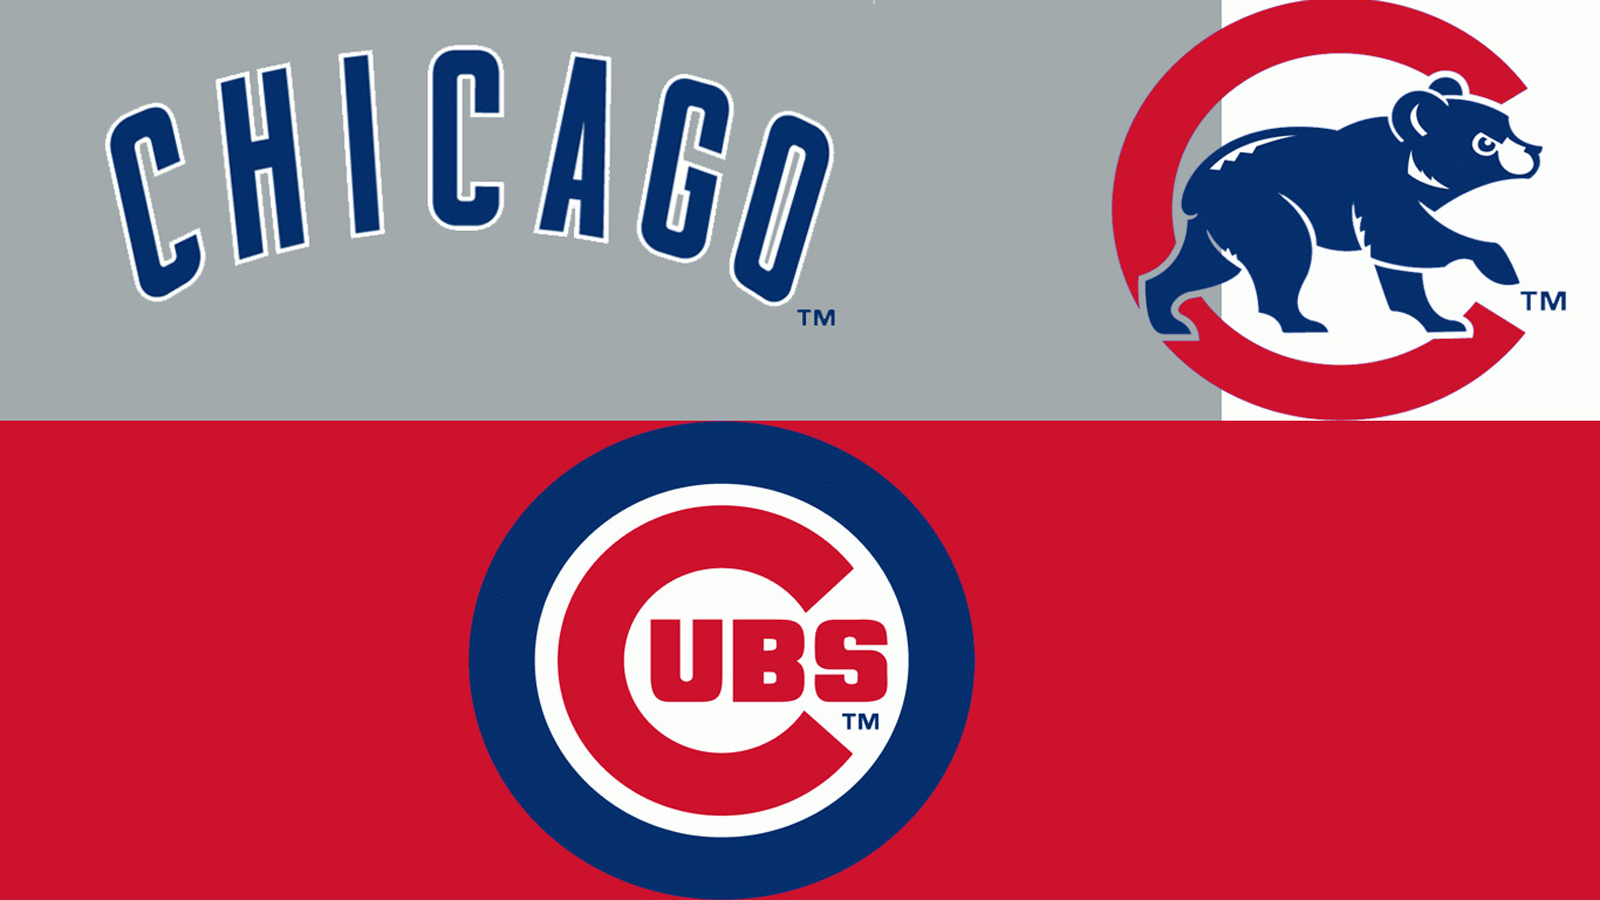 45+] Chicago Cubs Wallpaper 1920x1080 - WallpaperSafari